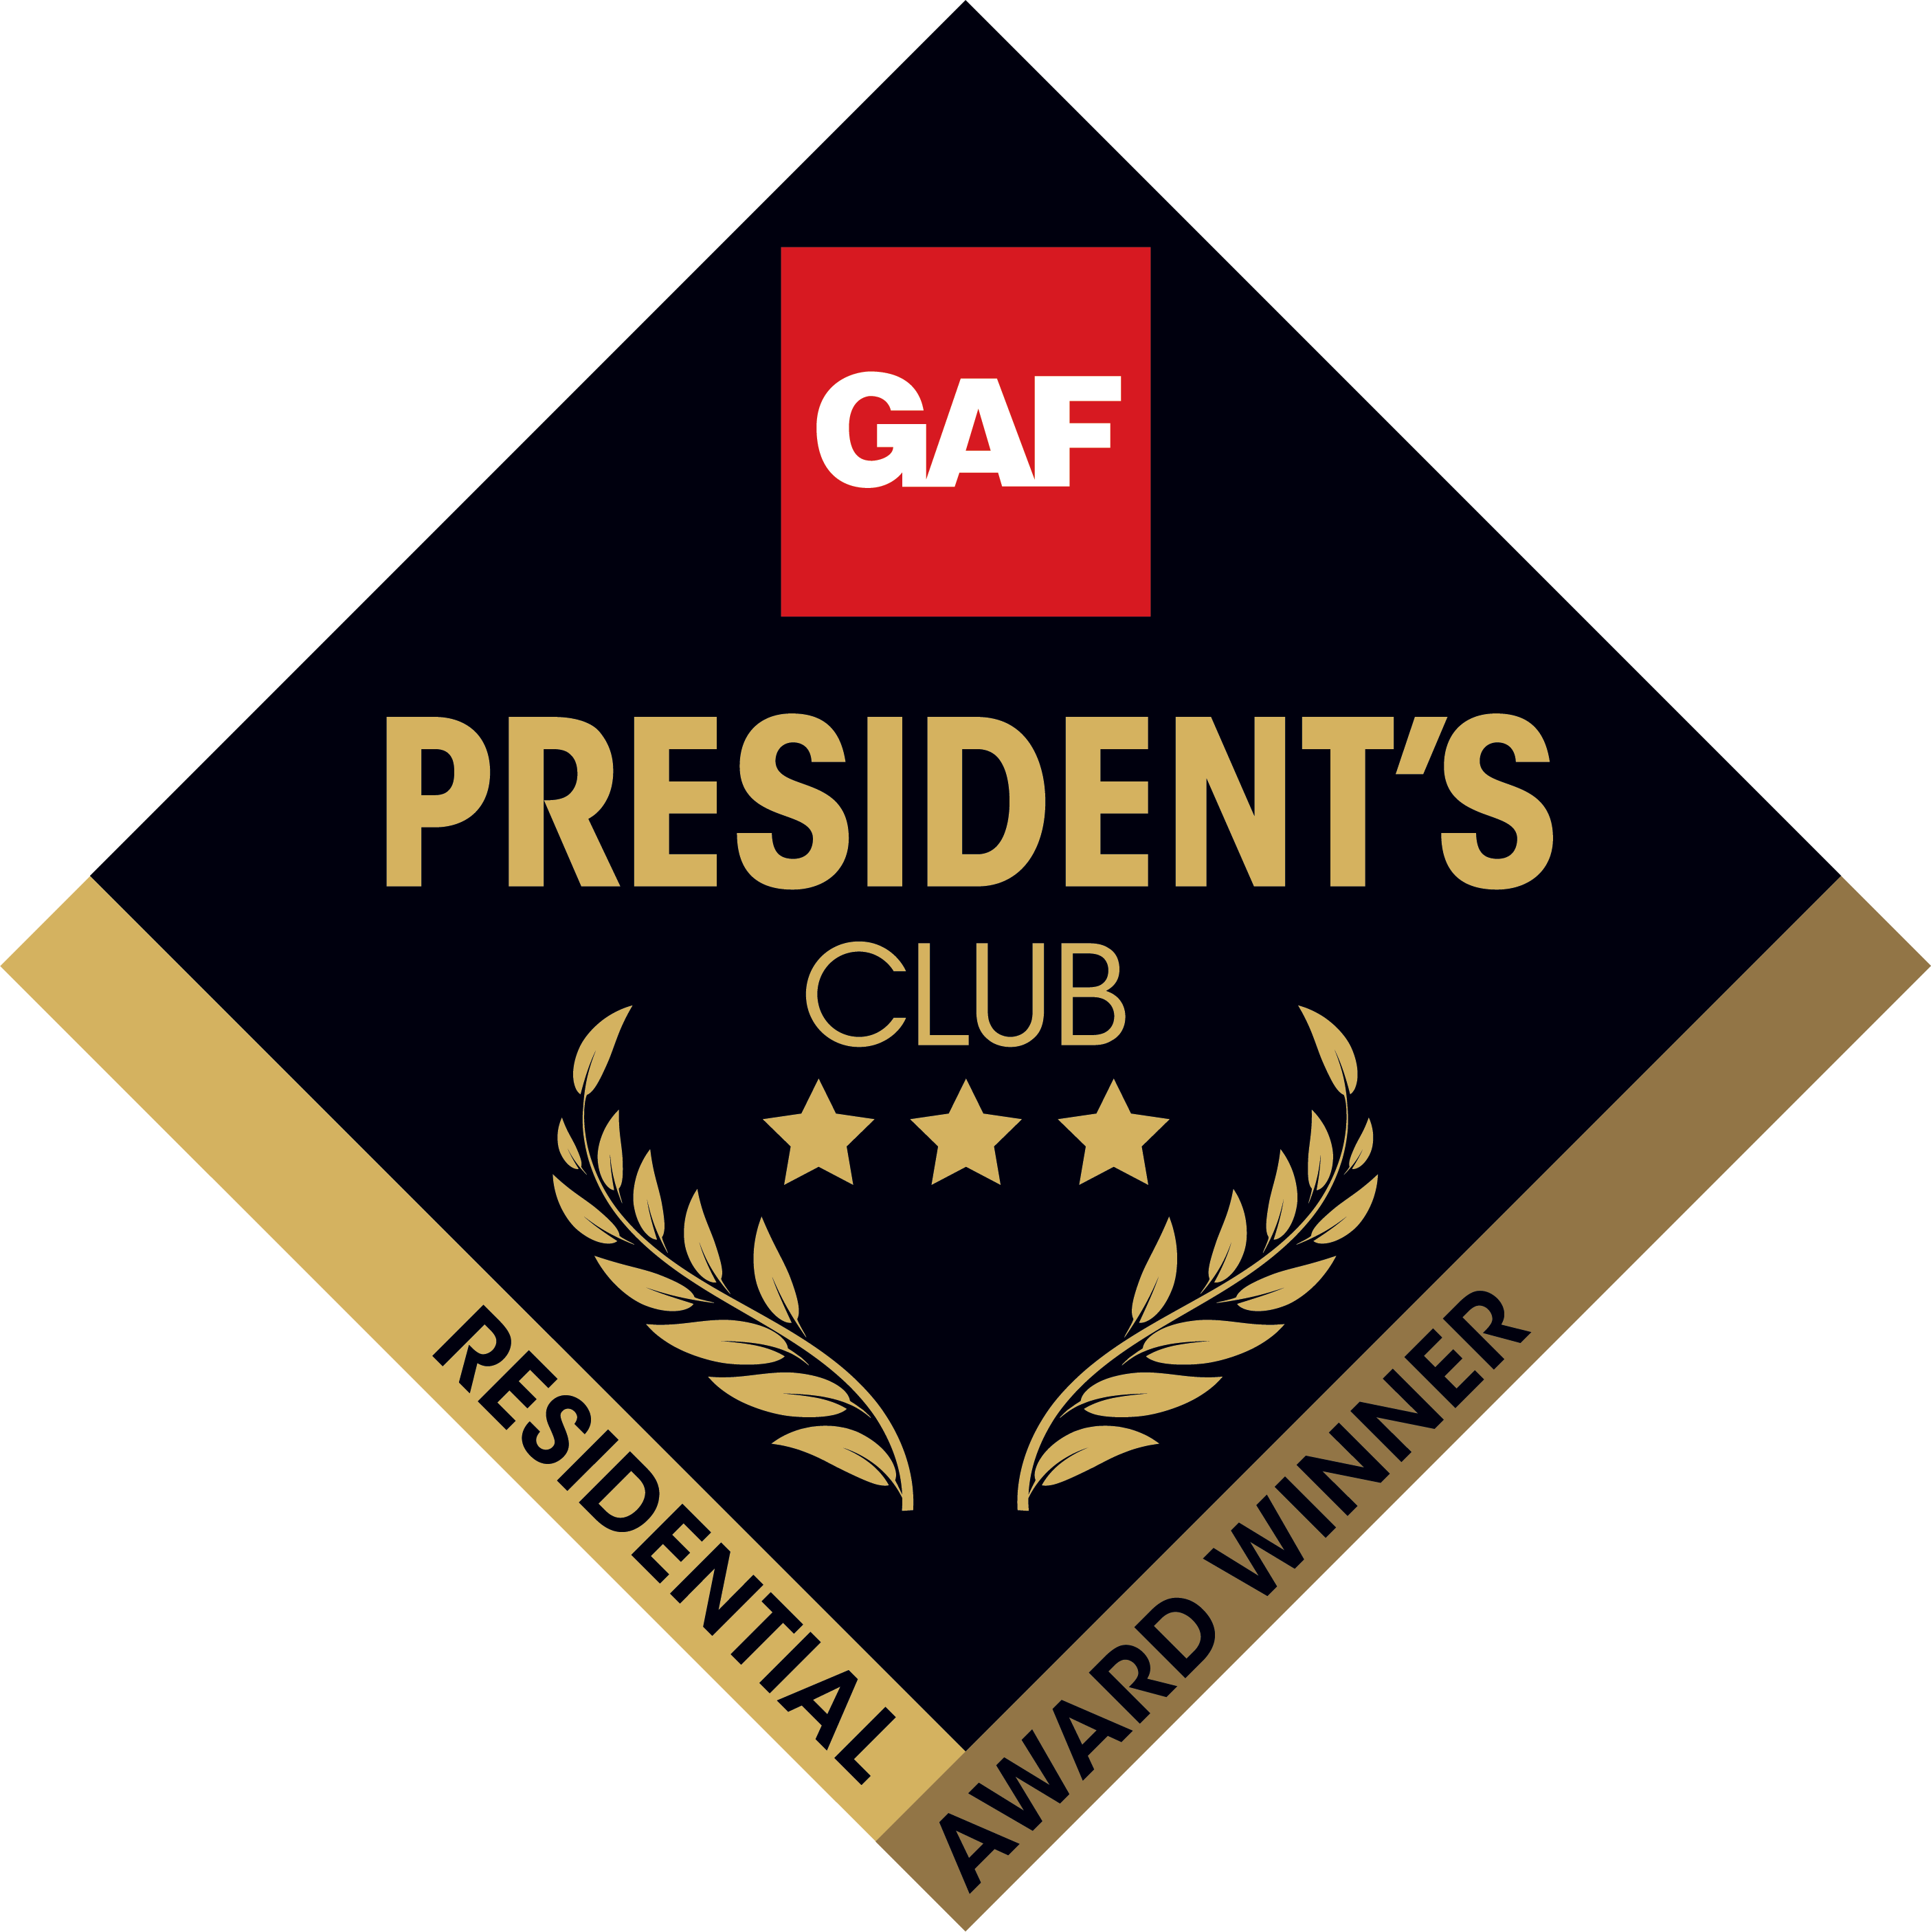 GAF 3 Star President's Club Award Logo for Residential Award Winners